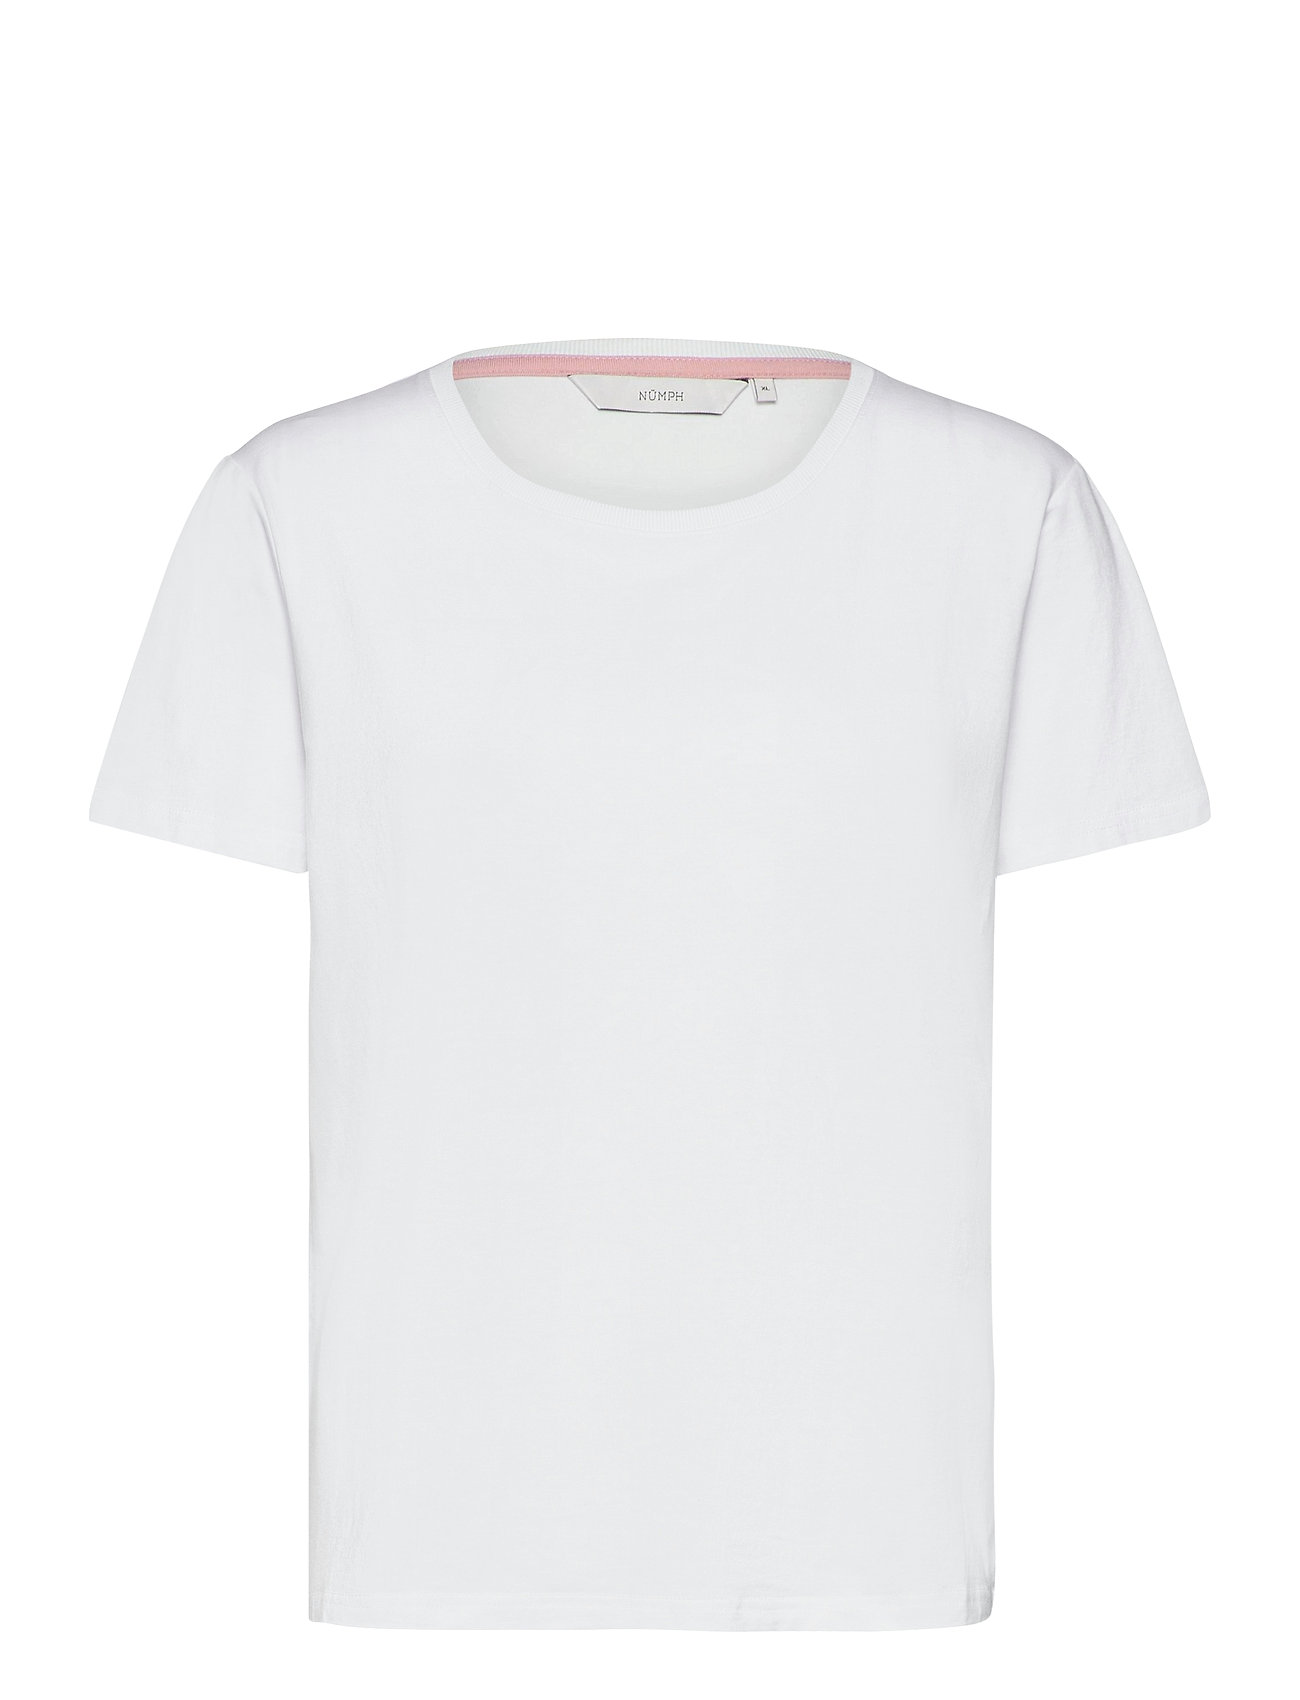 Nukazumi T-Shirt T-shirt Top Nümph & toppe fra Nümph dame i Sort Pashion.dk